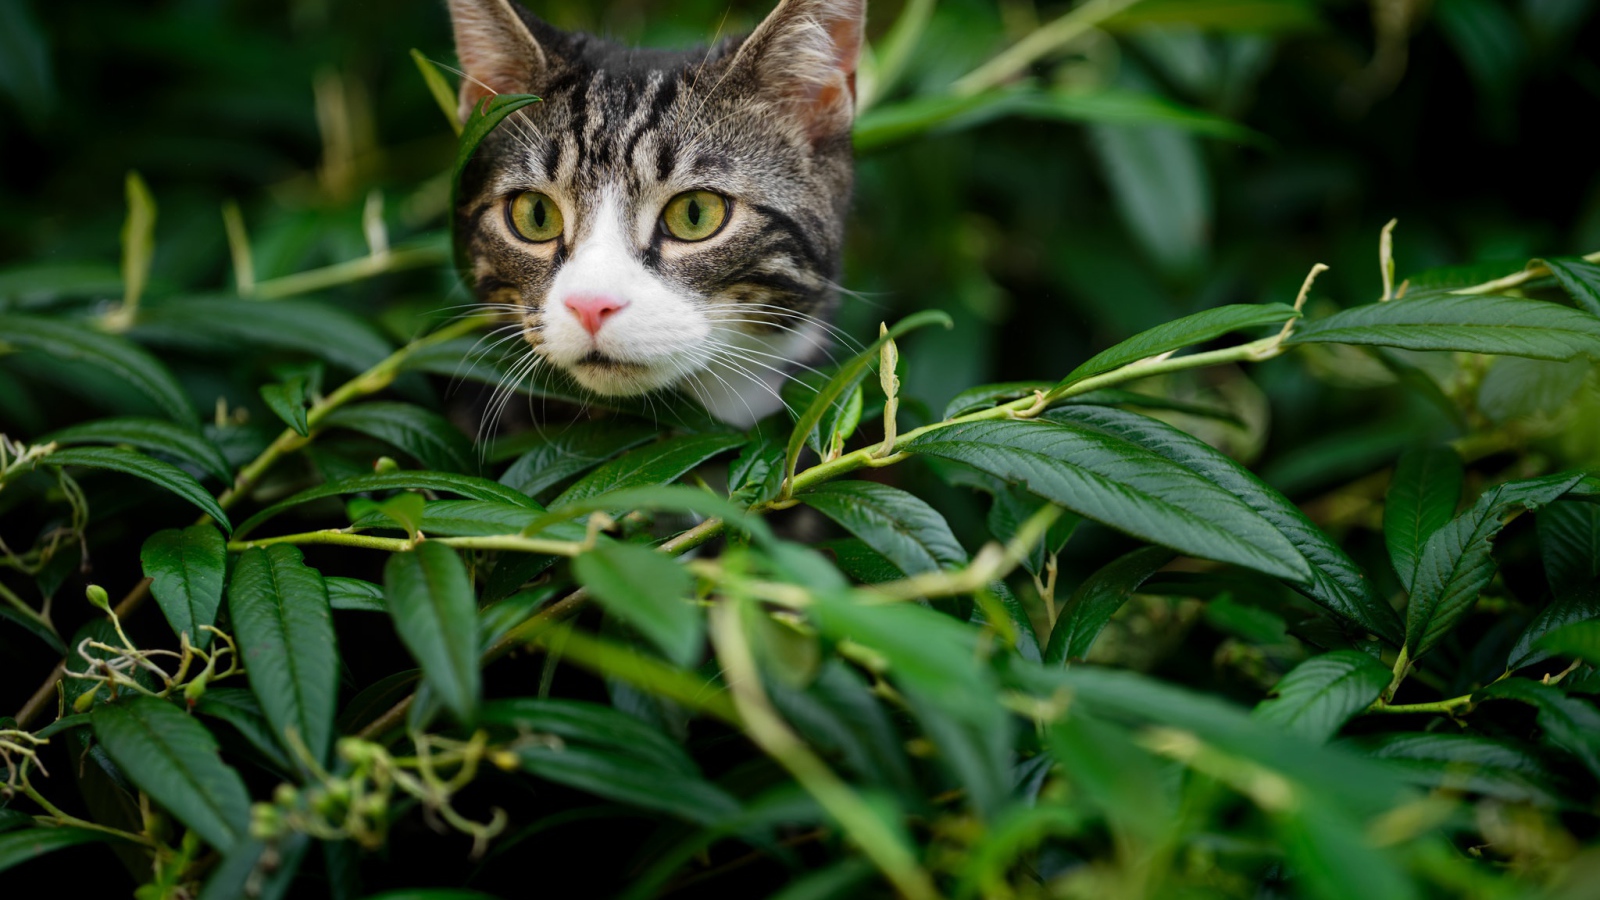 Curious gray cat sitting in ambush in green foliage